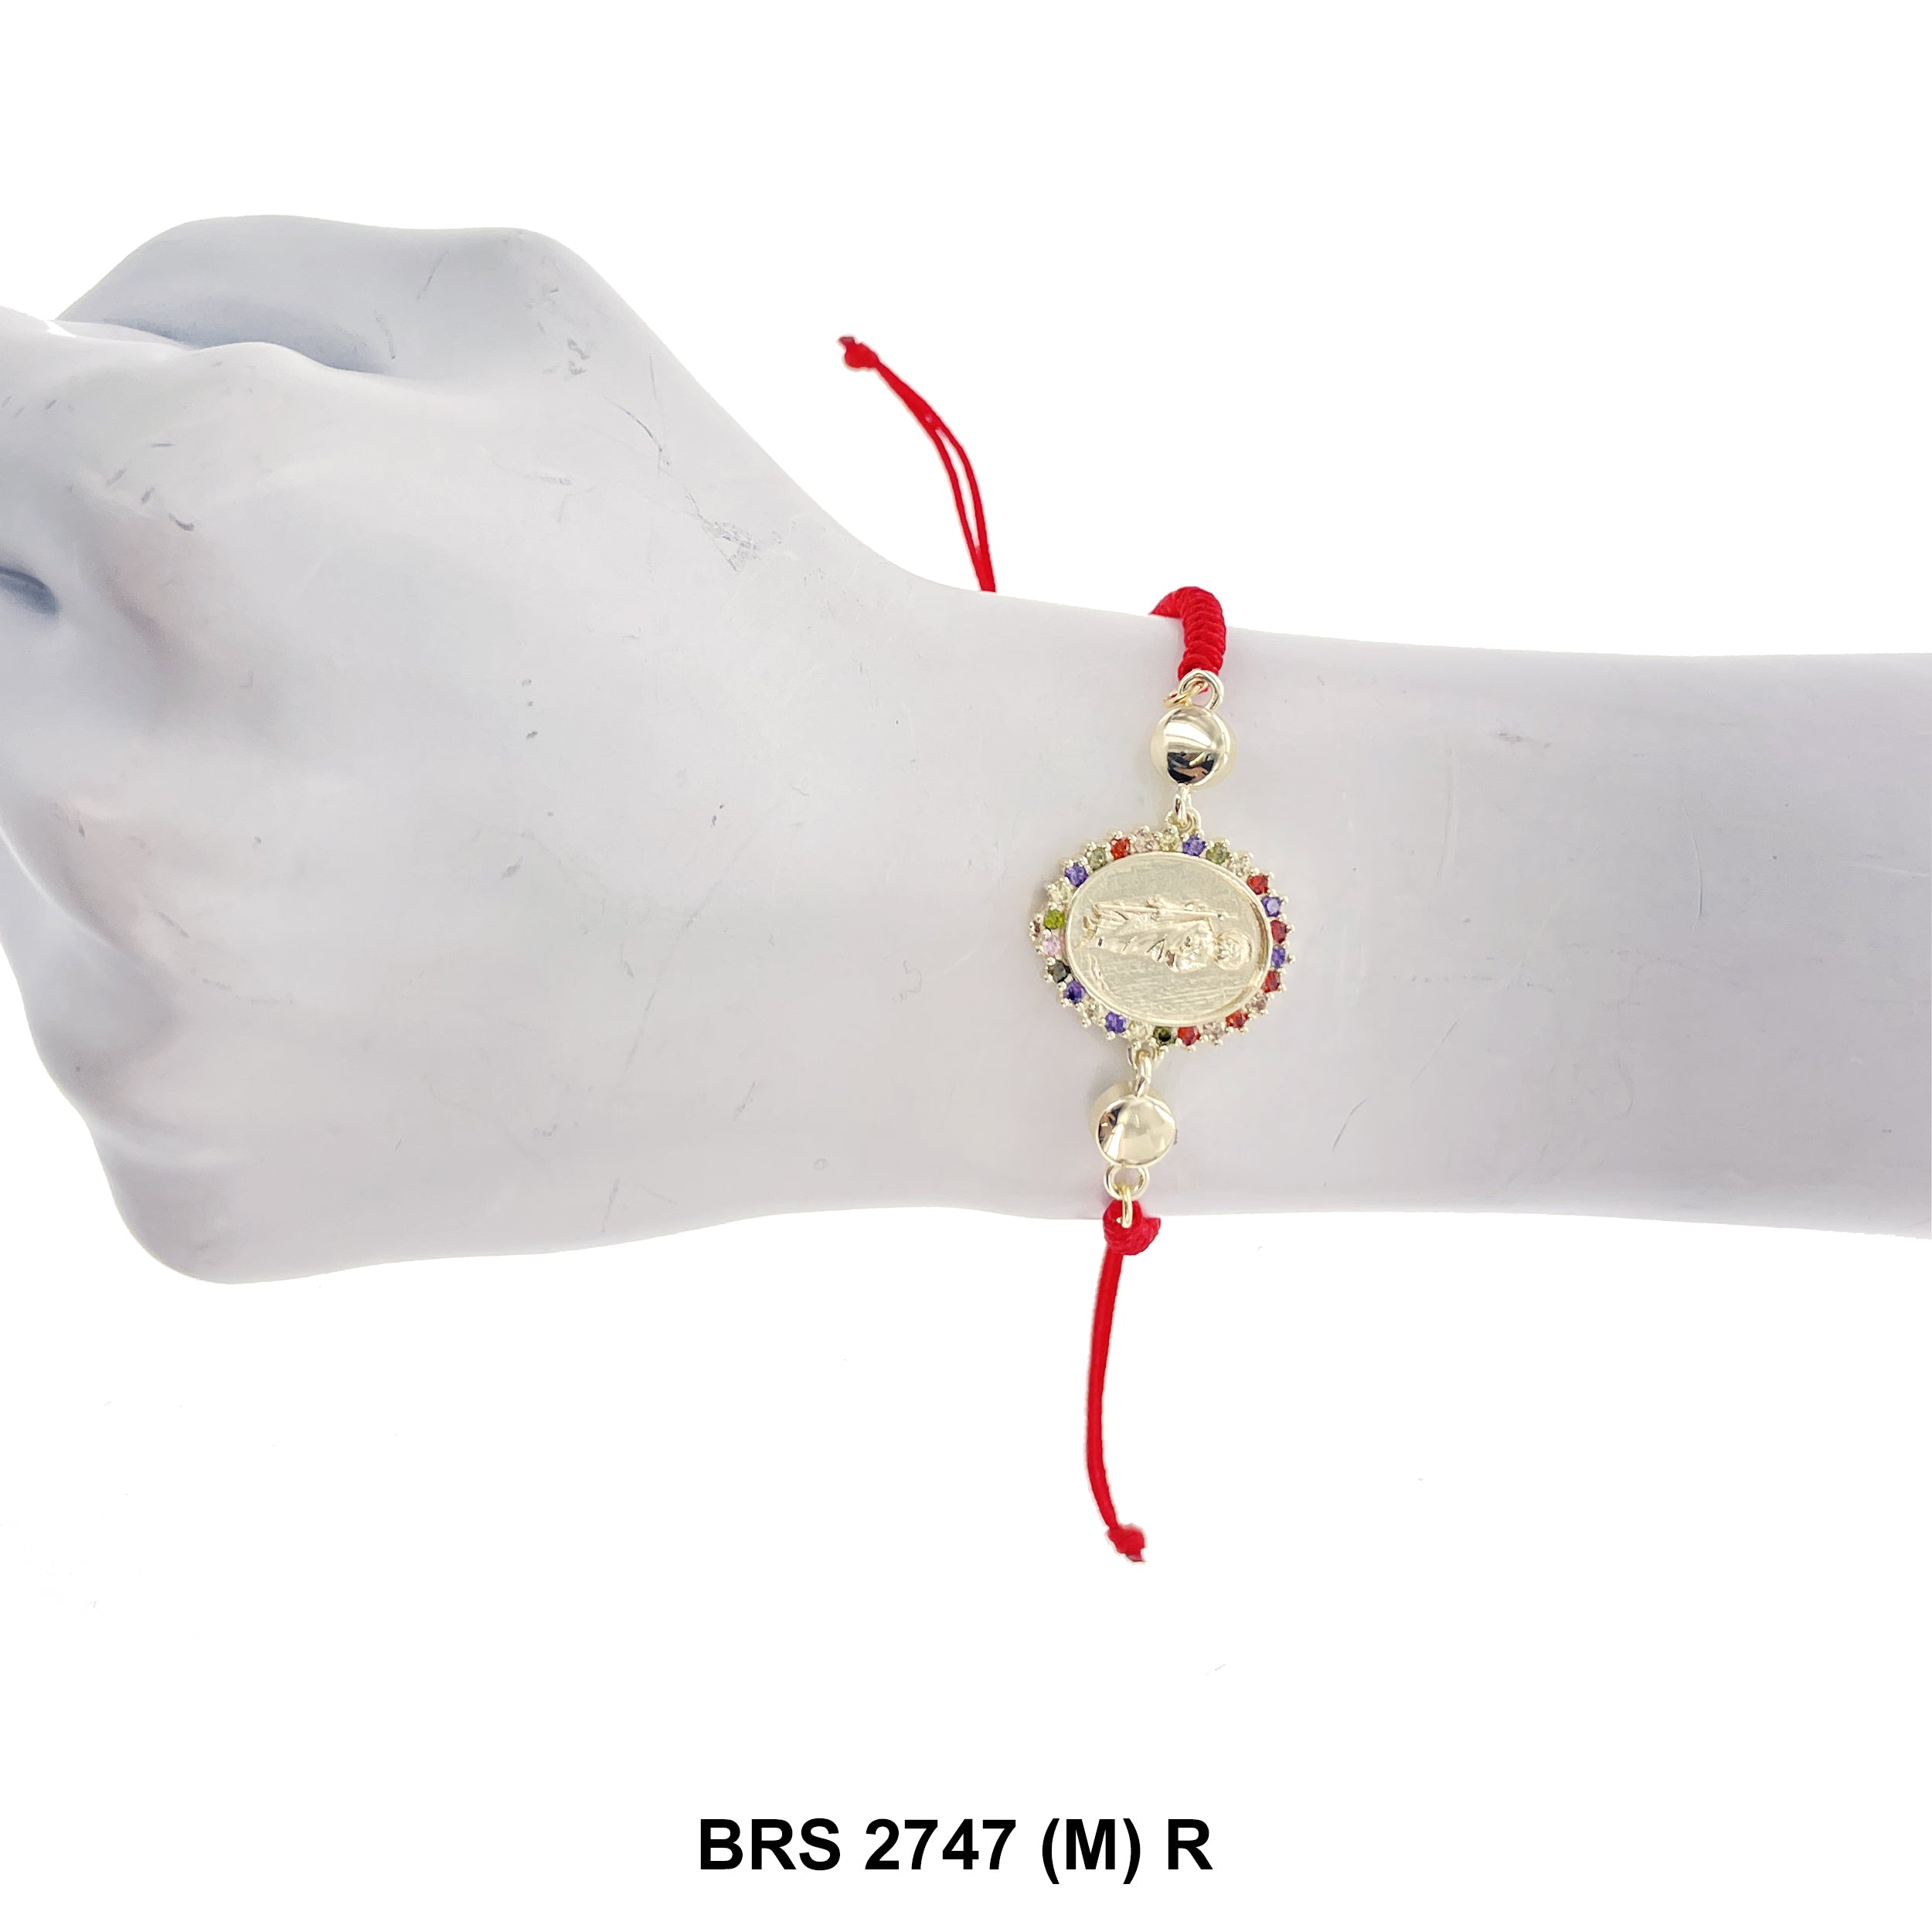 San Judas Thread Bracelets BRS 2747 (M) R